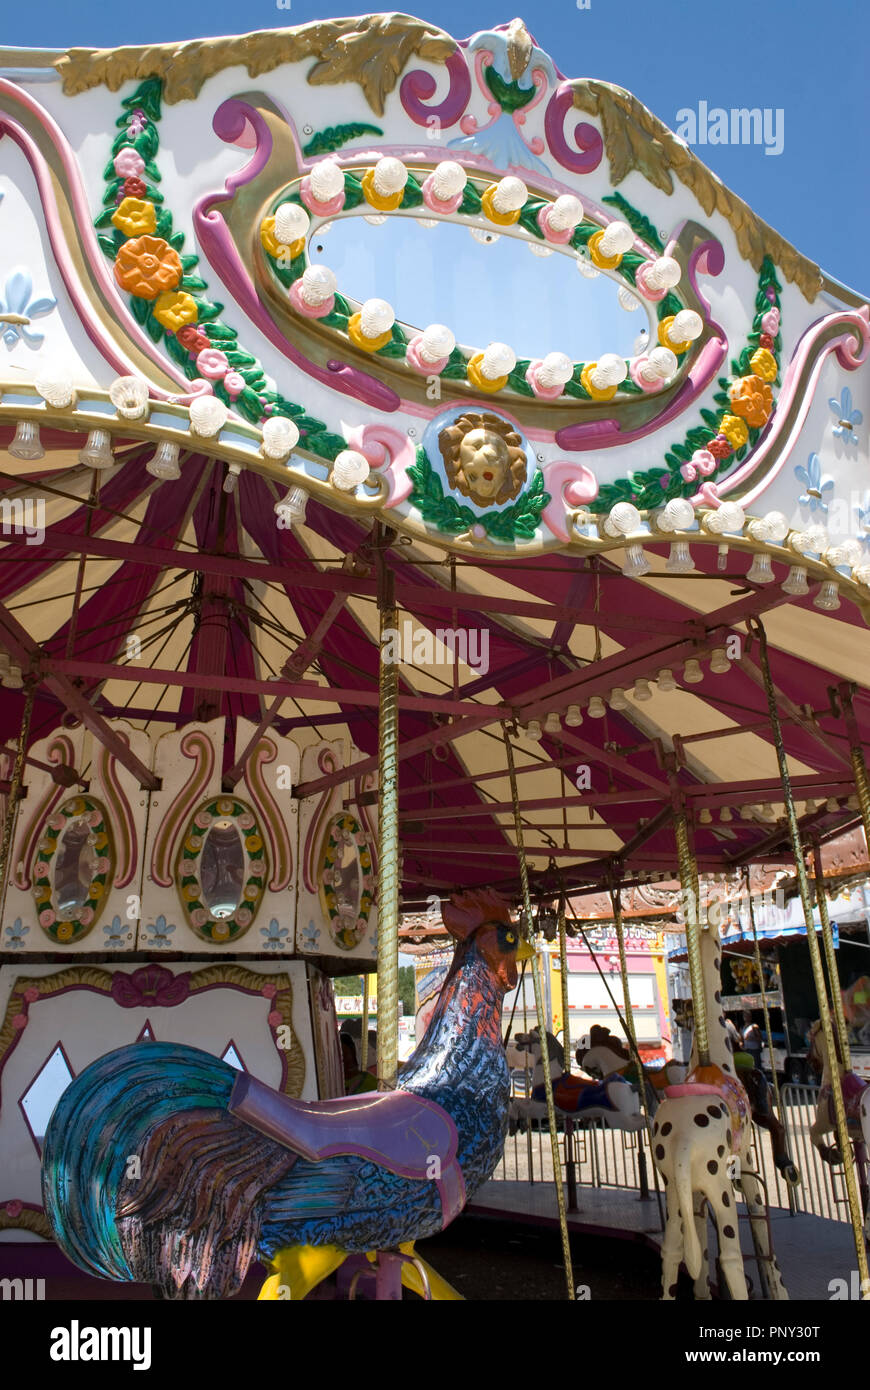 Hahn auf Karussell Fahrt am Ocean Drive Pavillon Amusement Park in North Myrtle Beach, South Carolina, USA. Stockfoto